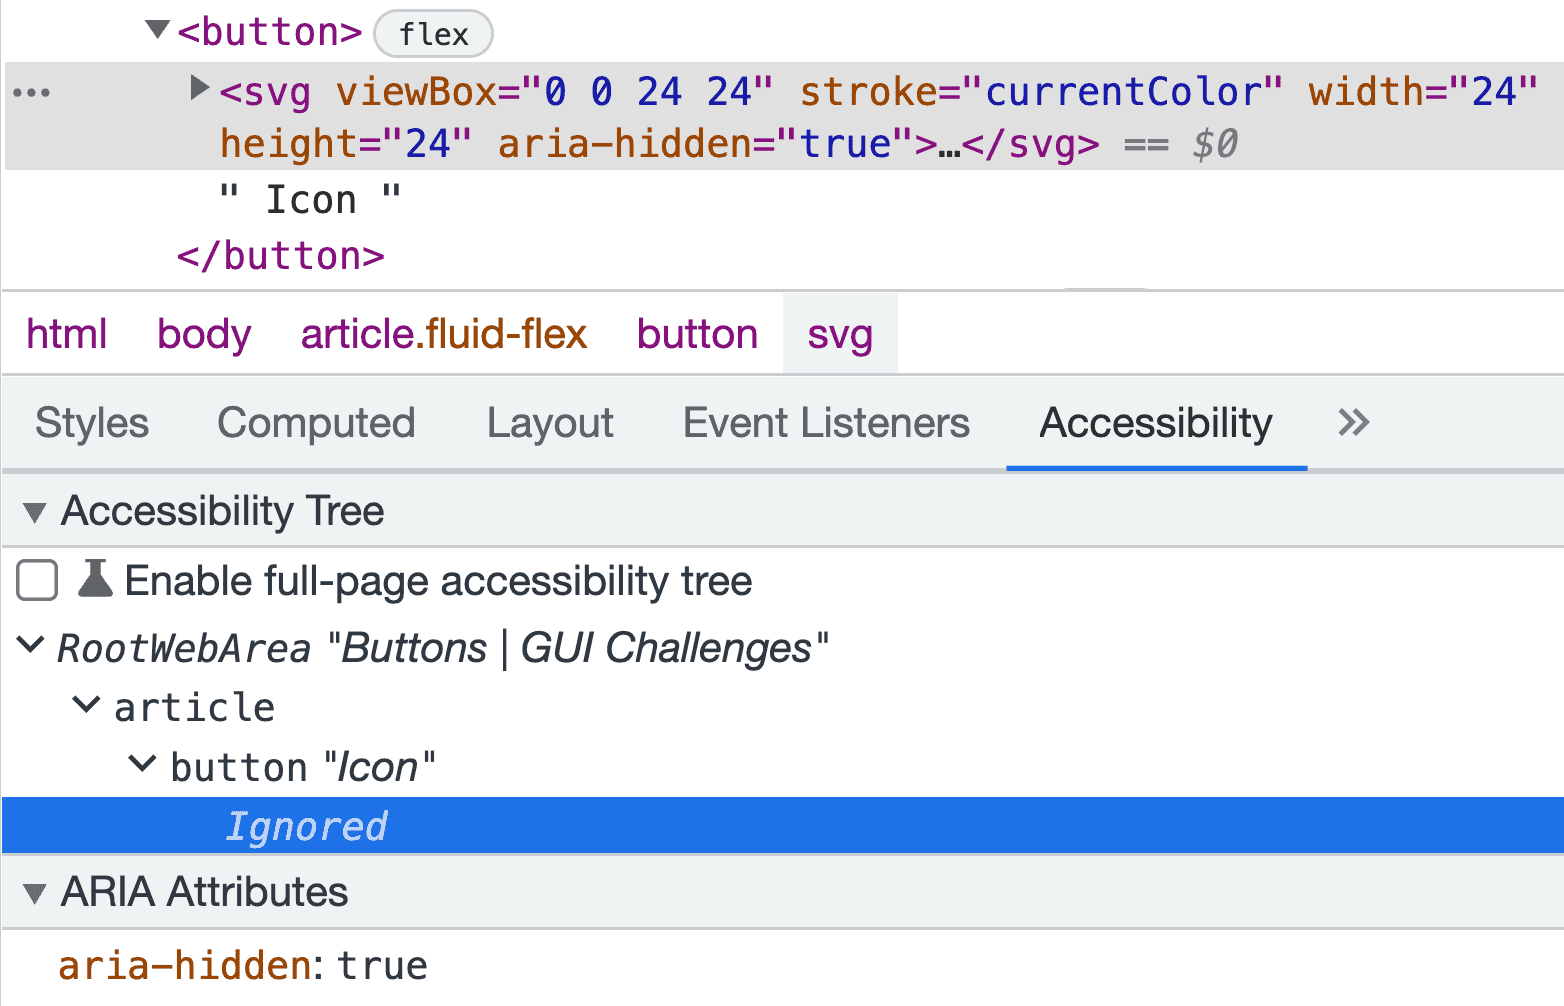 &quot;أدوات مطوري البرامج في Chrome&quot; تعرض شجرة تسهيل الاستخدام للزر تتجاهل الشجرة صورة الزر لأنها تتضمن مجموعة aria-hidden على true.